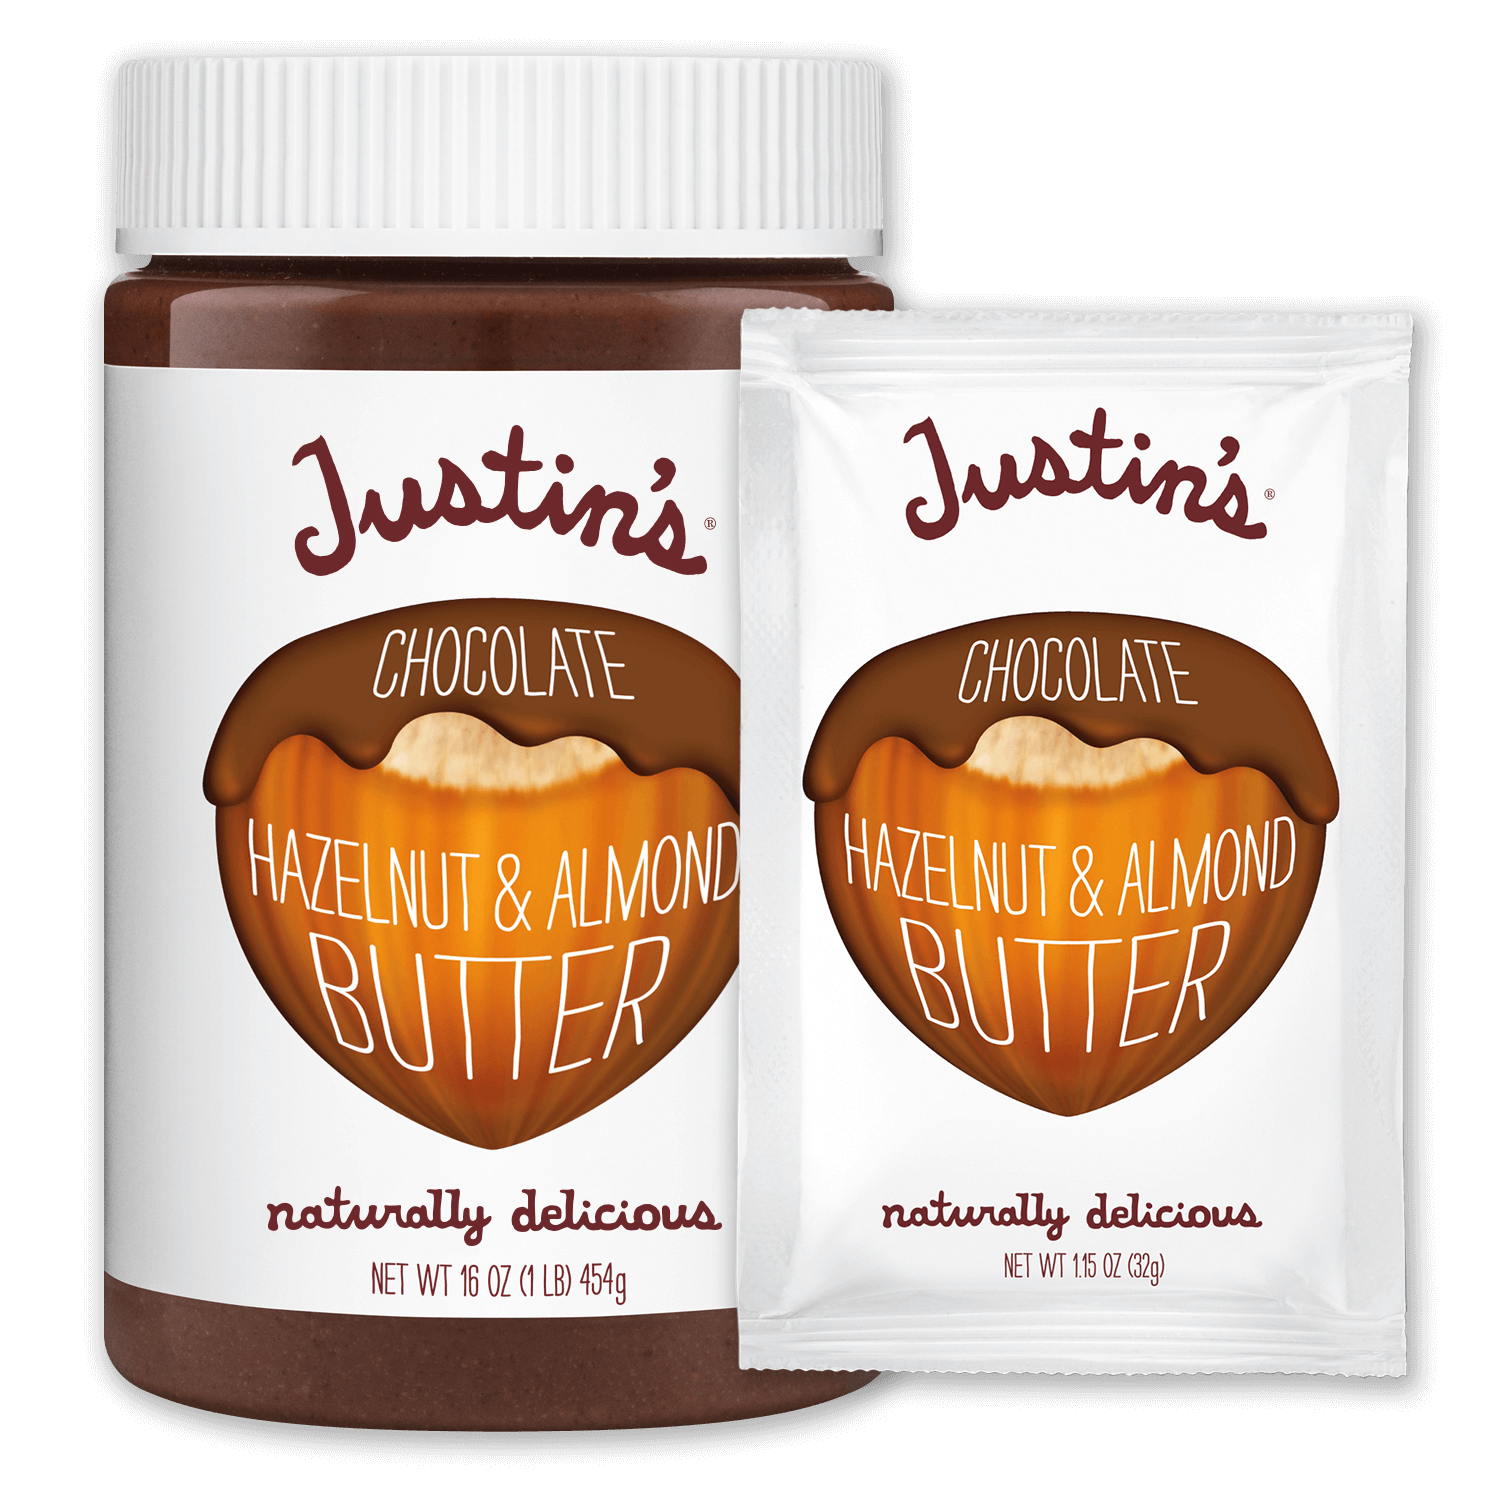 Justin's Chocolate Hazelnut & Almond Butter Spread jar 16 oz. beside its Squeeze Pack 1.15 oz. version